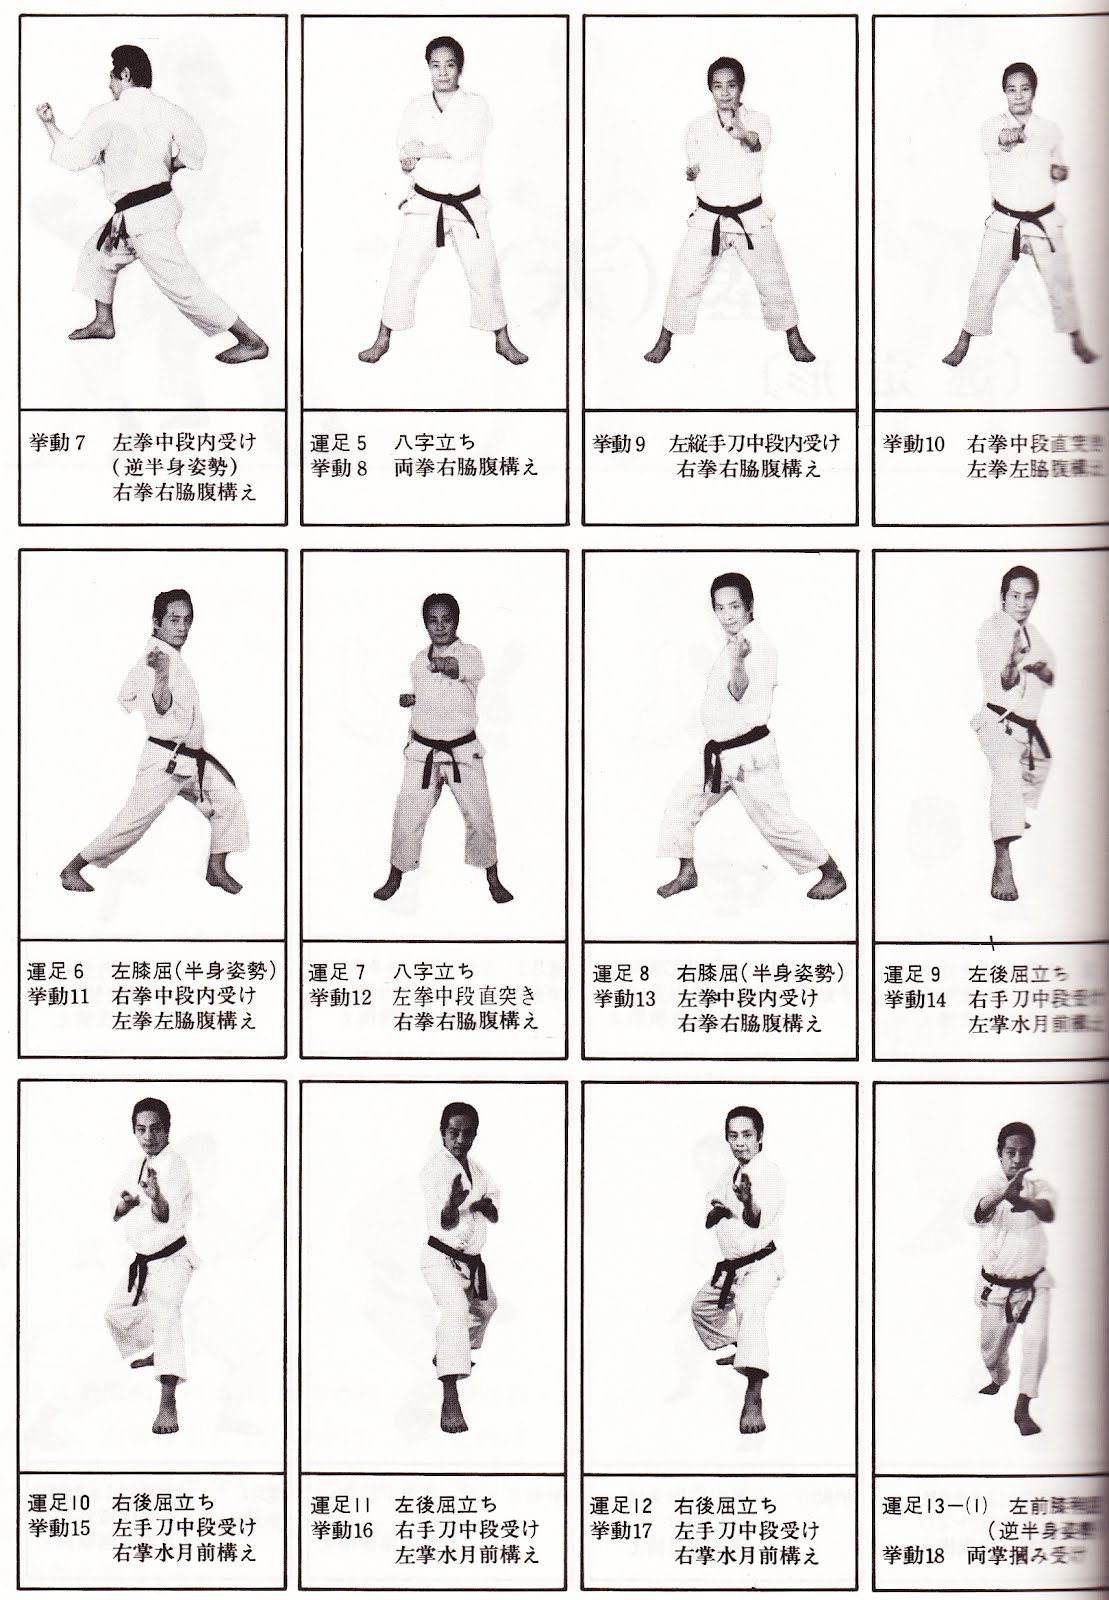 Basic Karate Moves